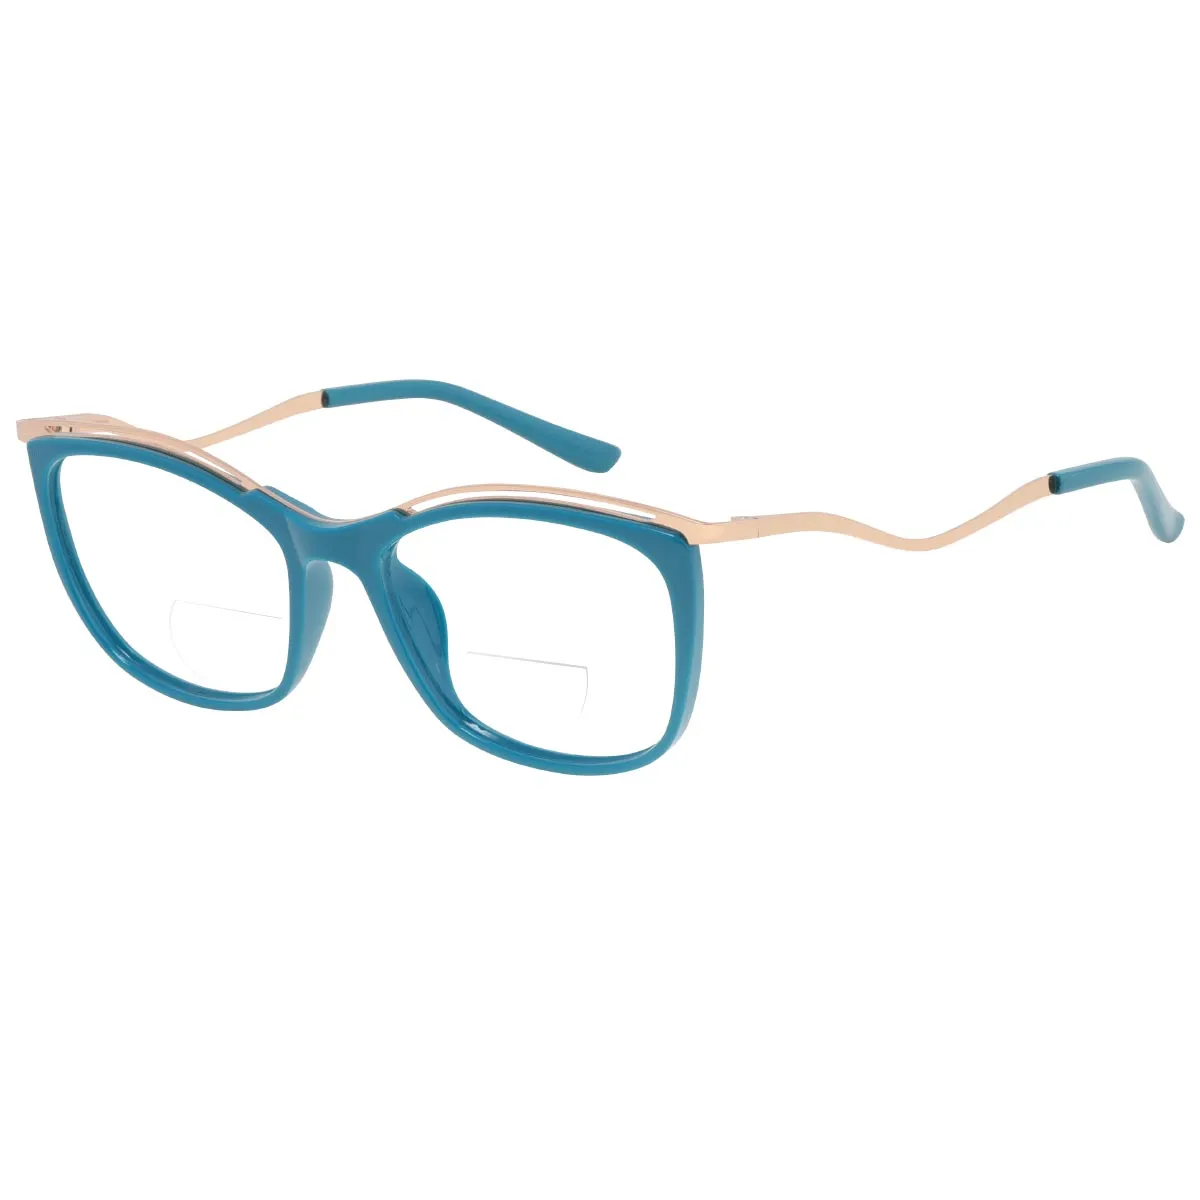 Fashion Square Blue Reading Glasses for Women